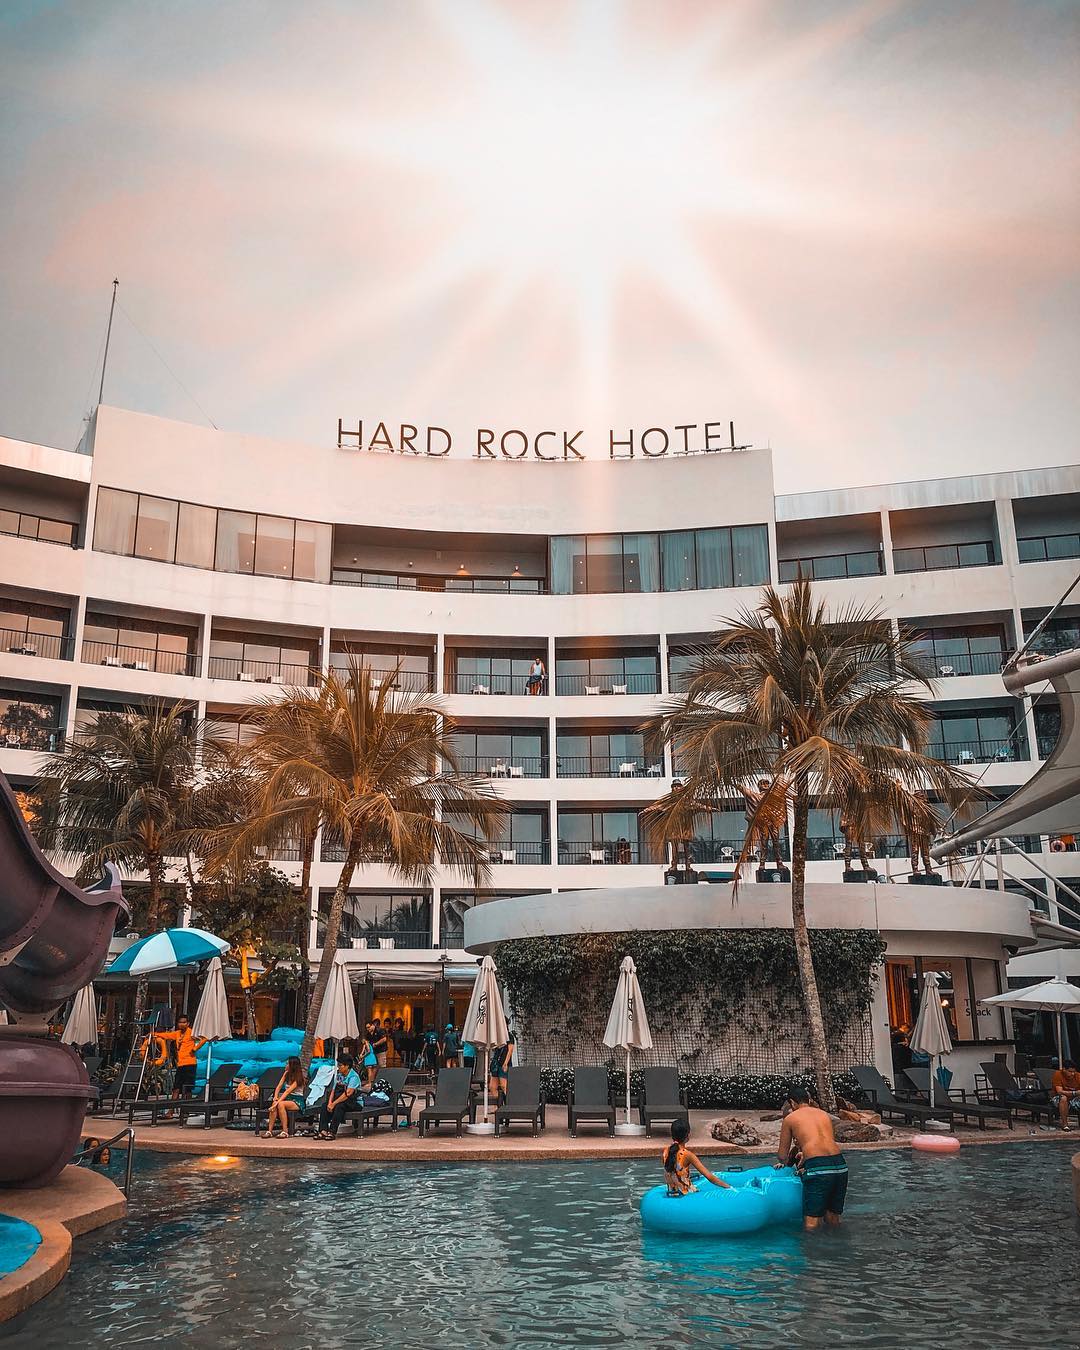 Hard Rock Penang - Hard Rock Hotel opening at Genting Highlands in 2027